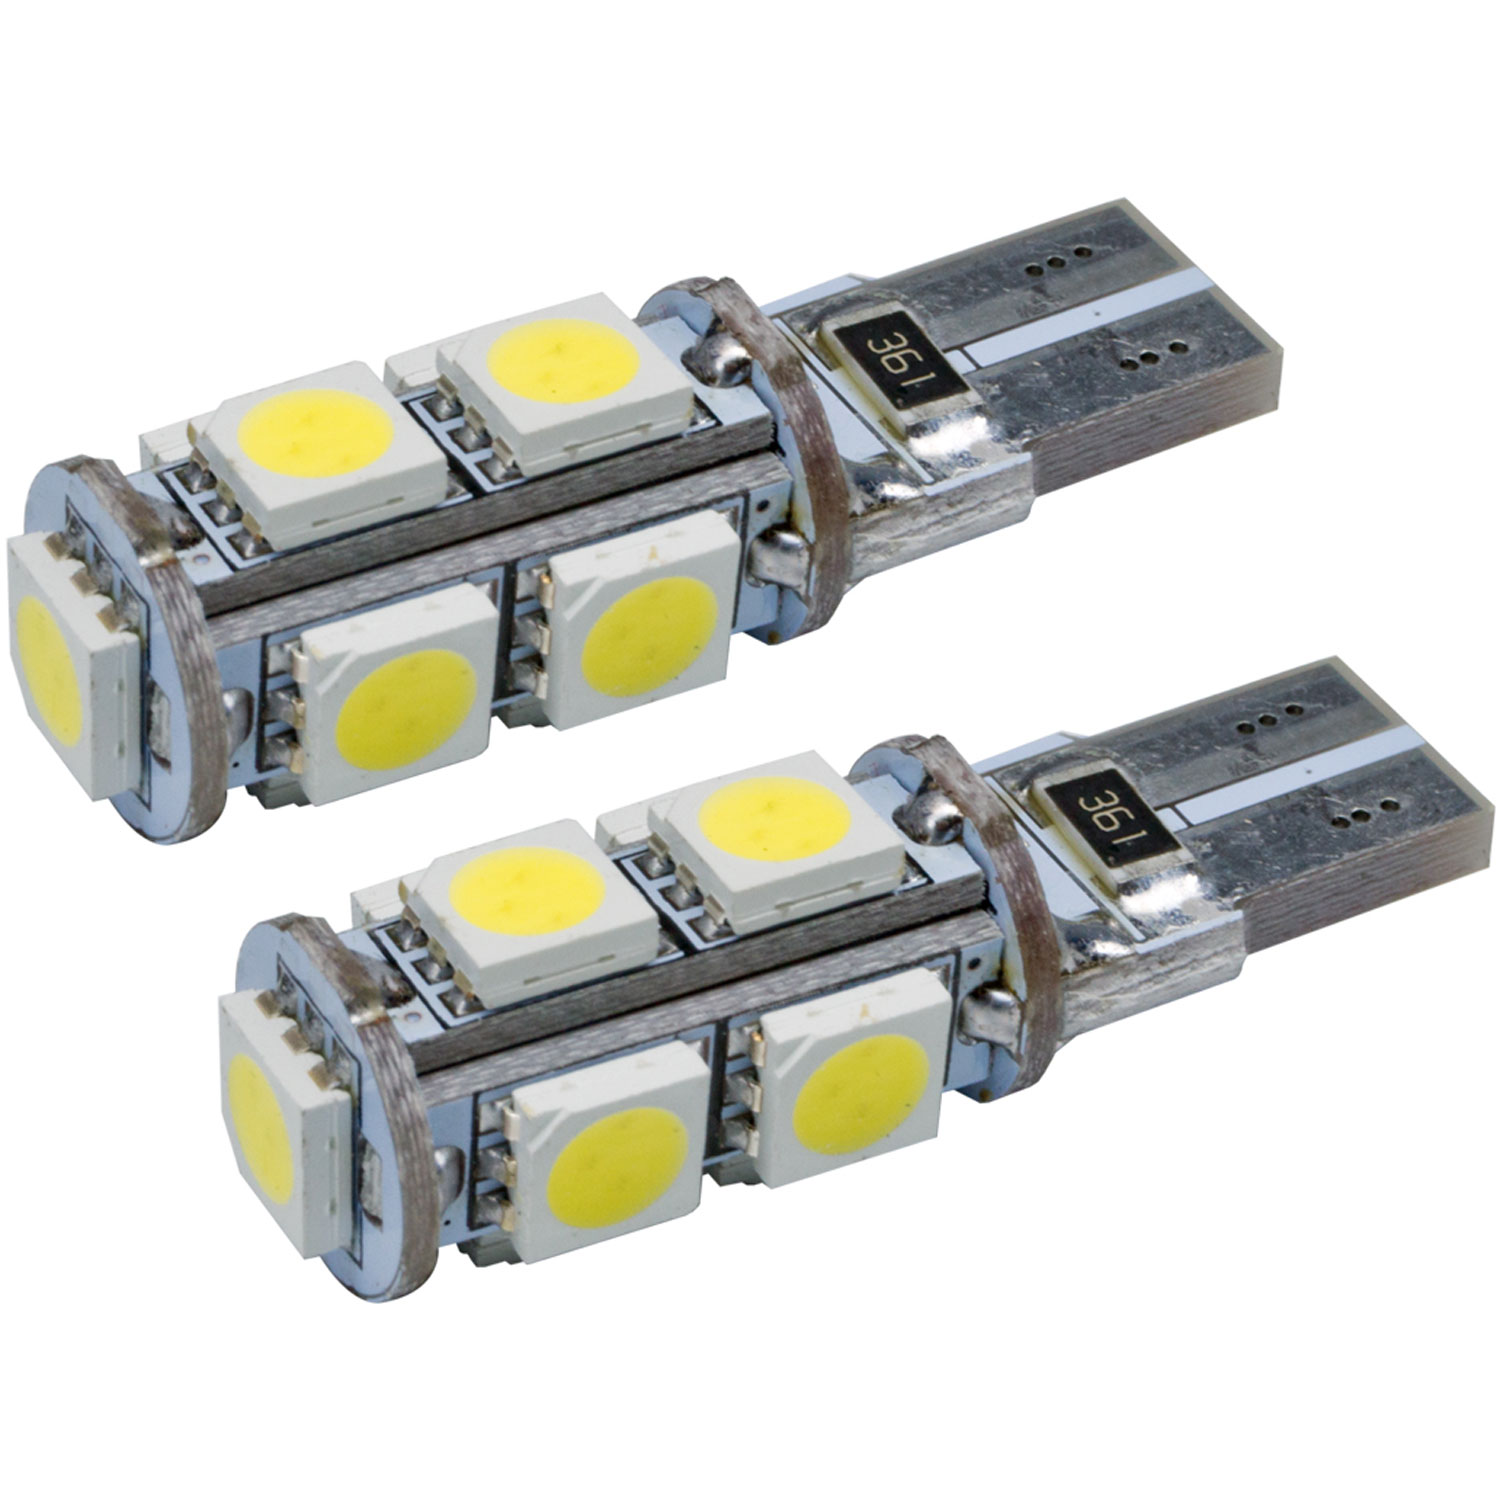 T10 LED 3-Chip Bulbs 9 LEDs